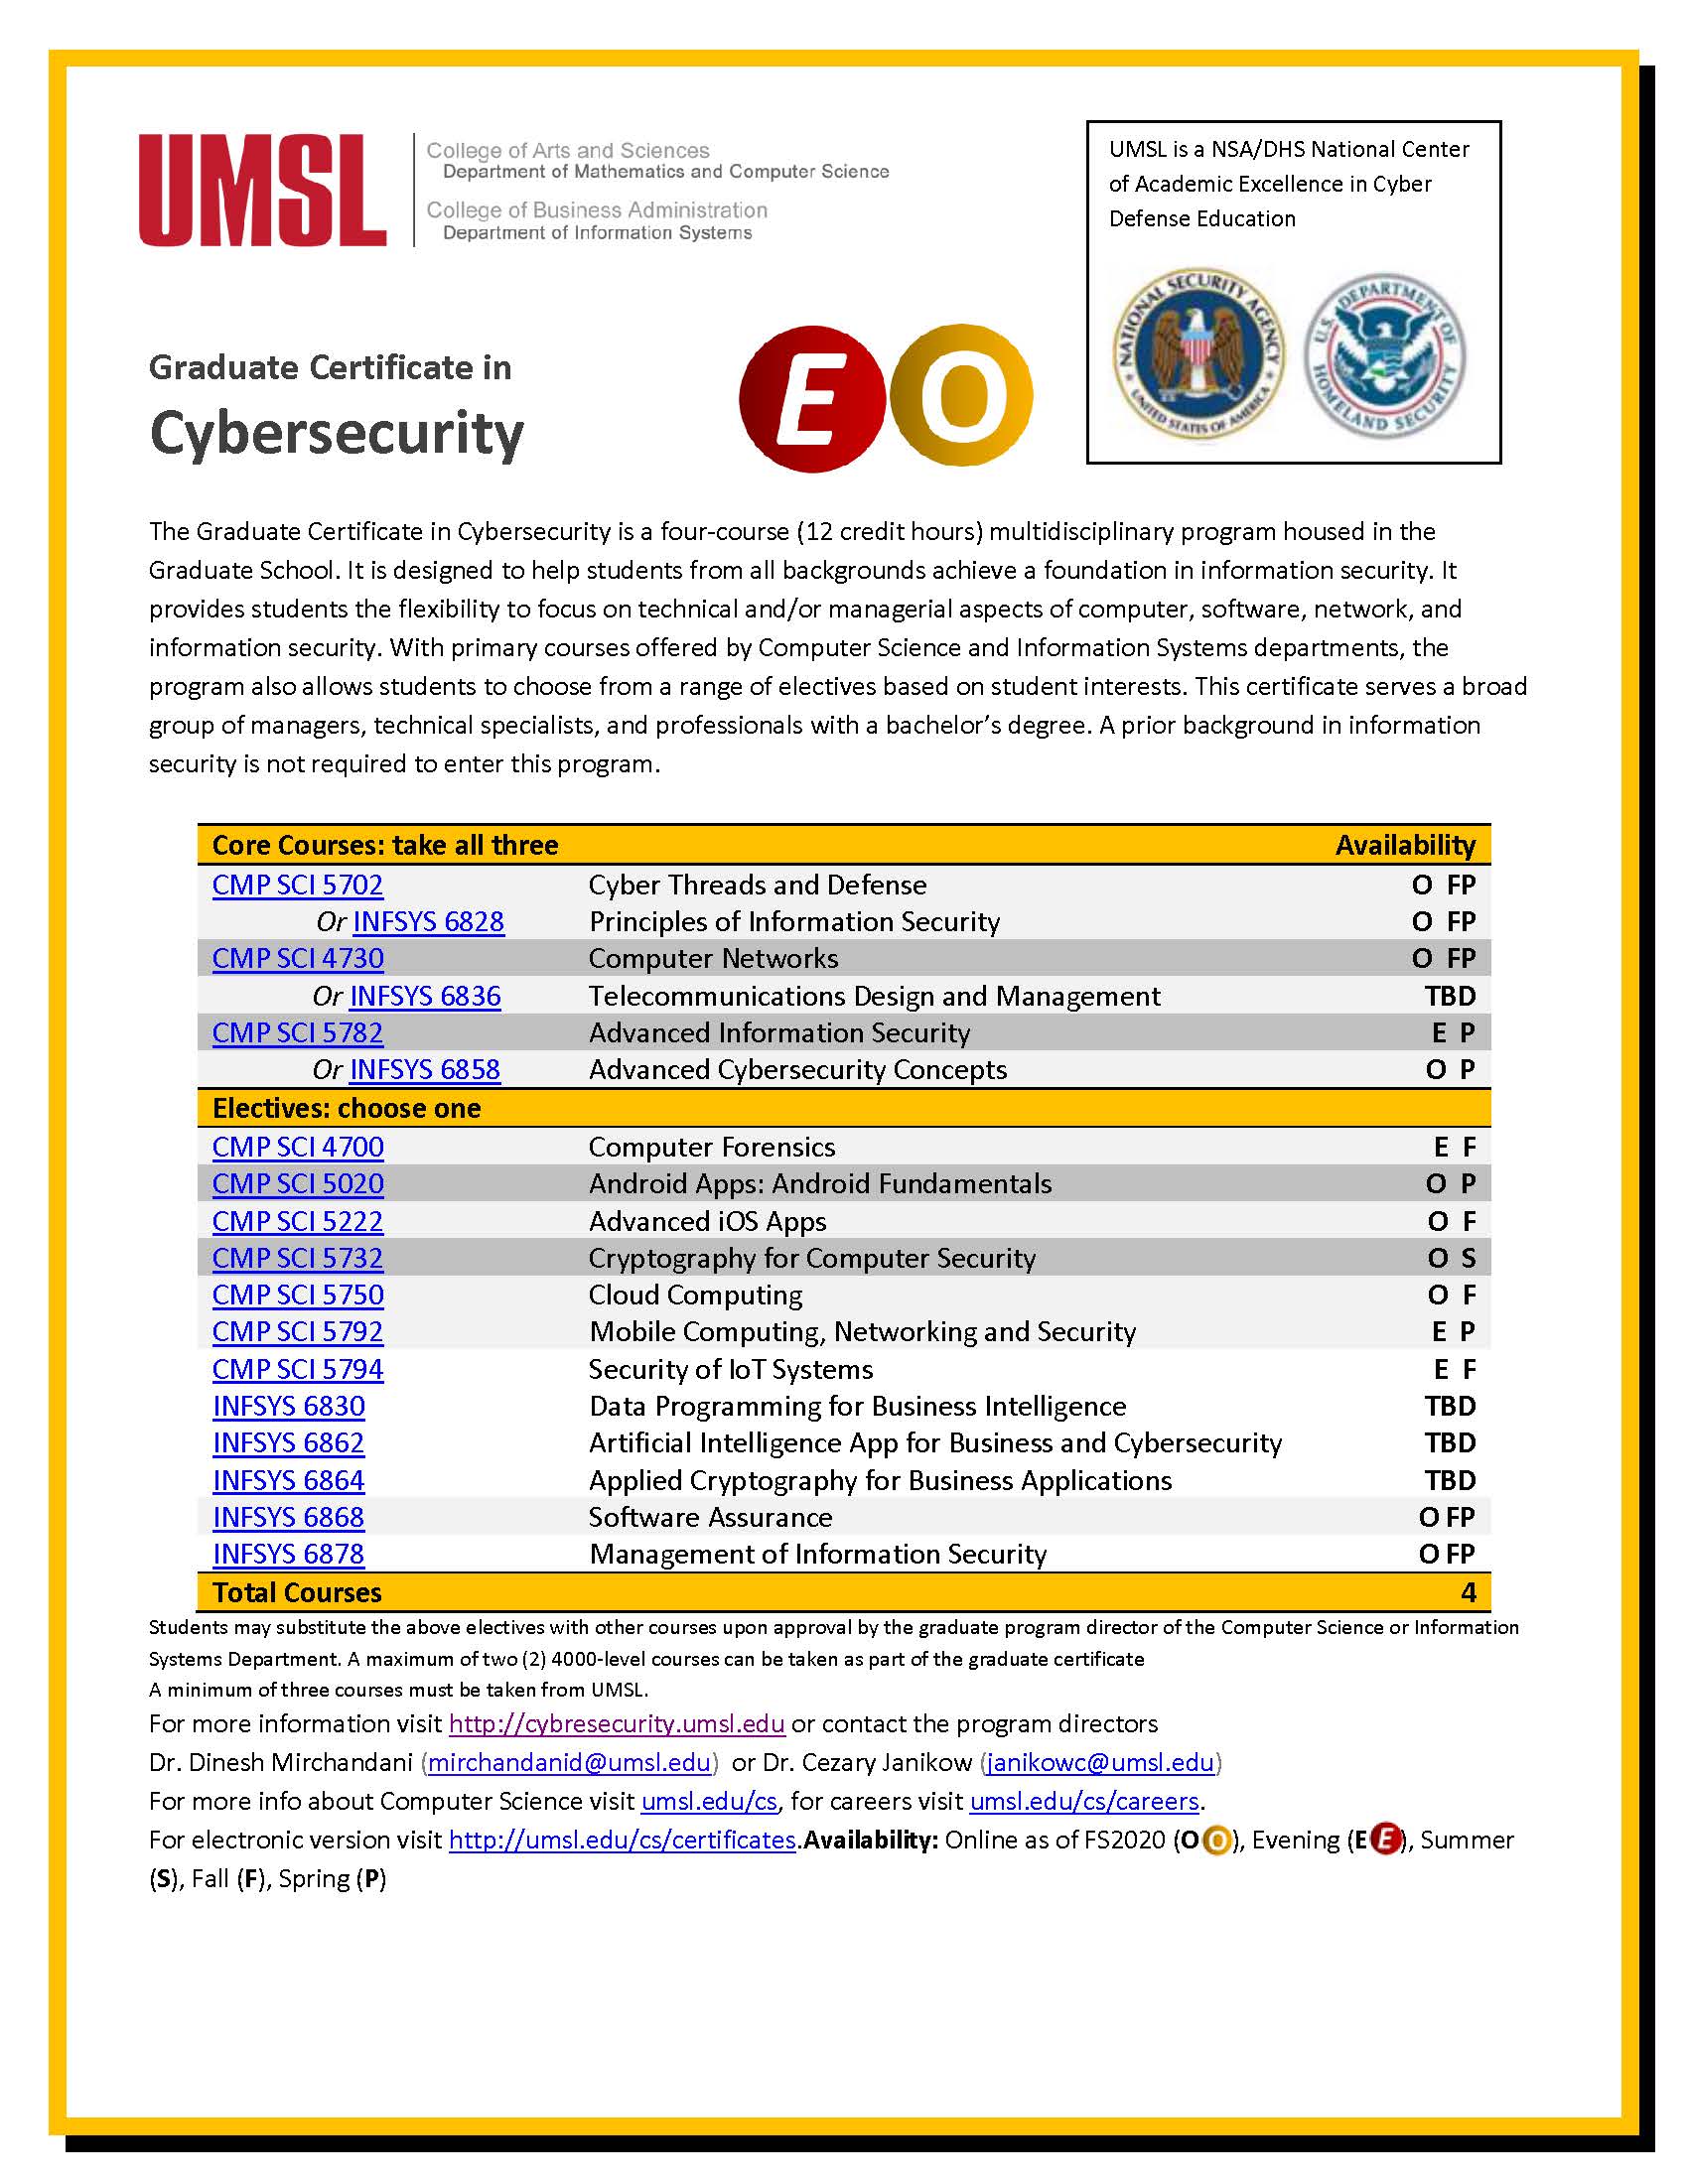 CertificateGraduate_Cybersecurity_Flyer.jpg